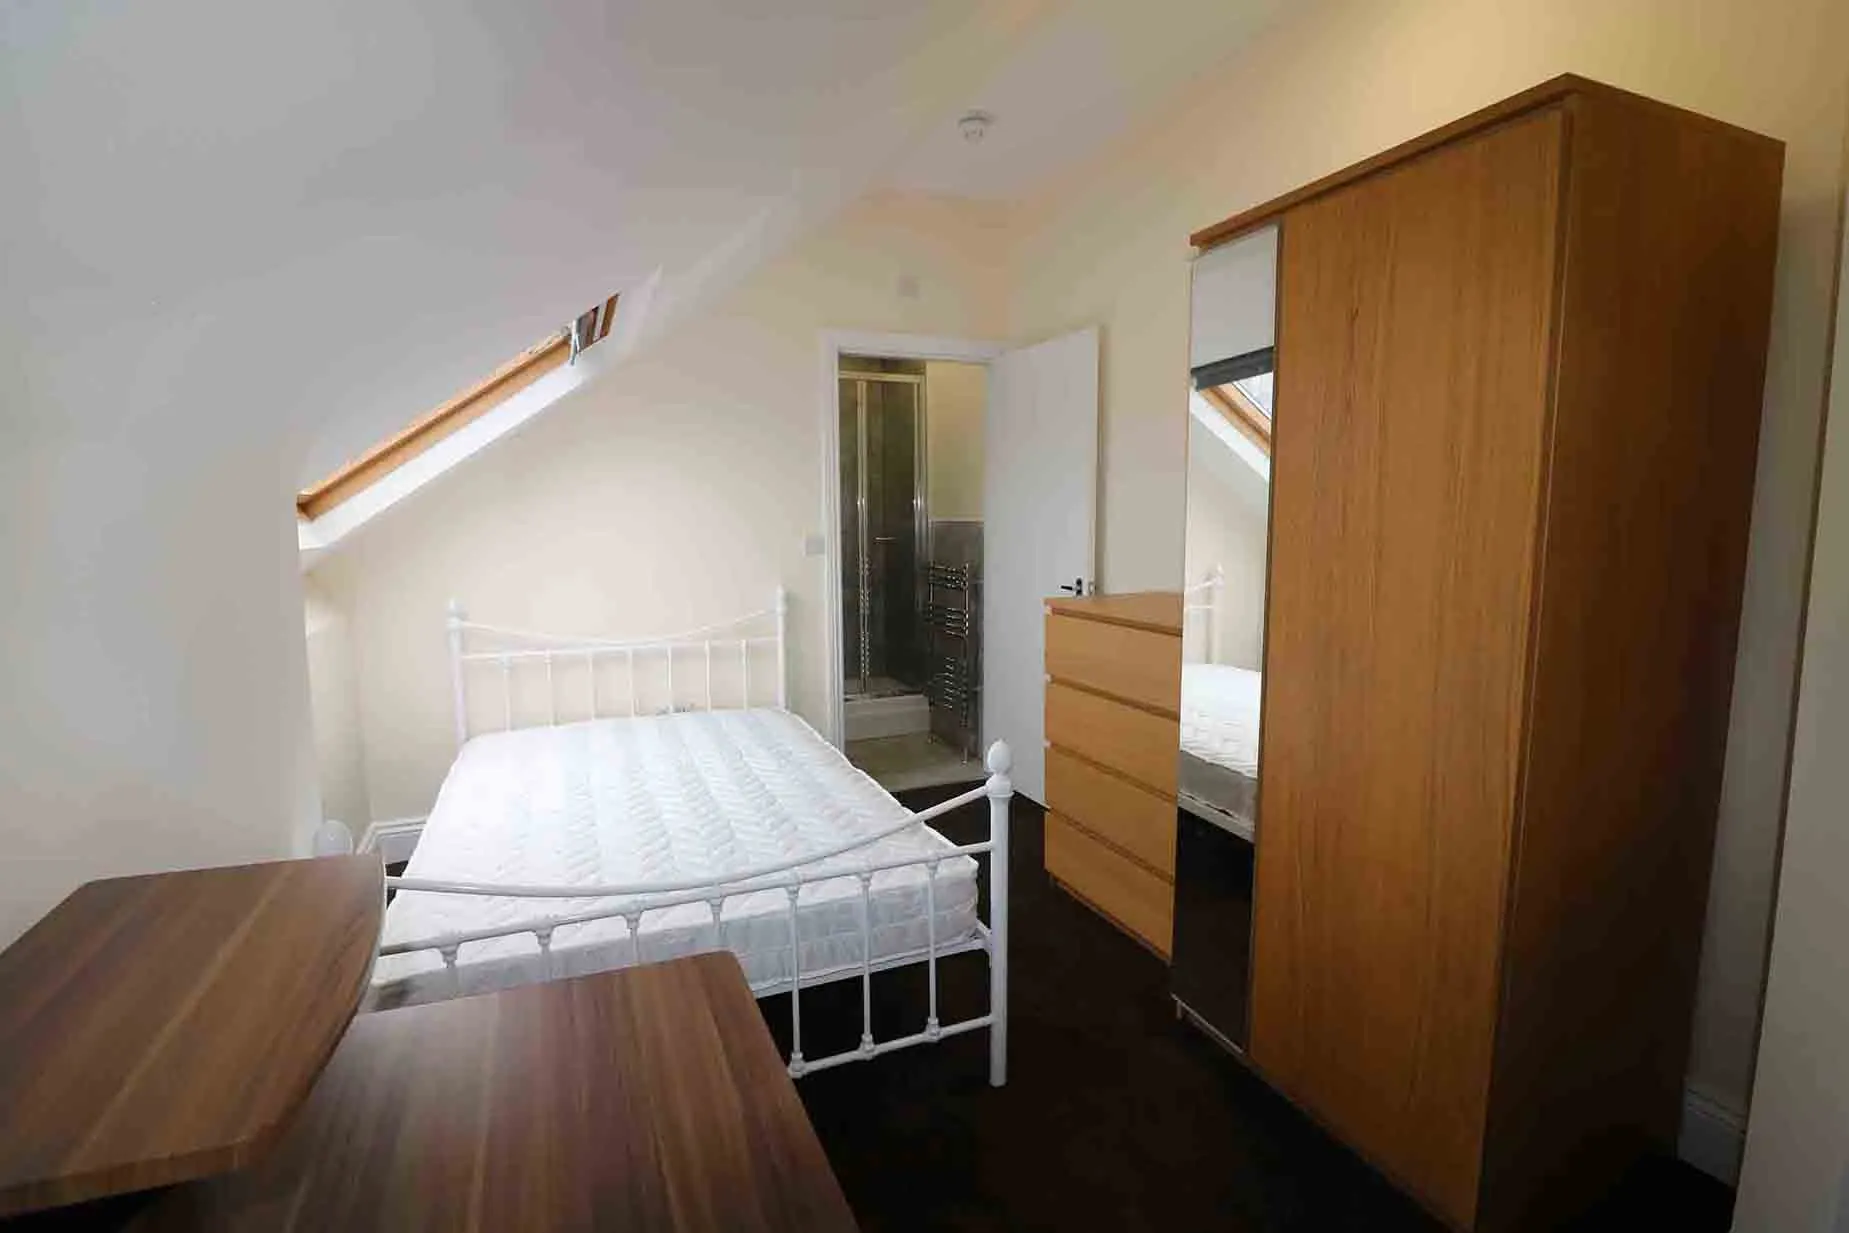 12-room shared house on regent street accommodation